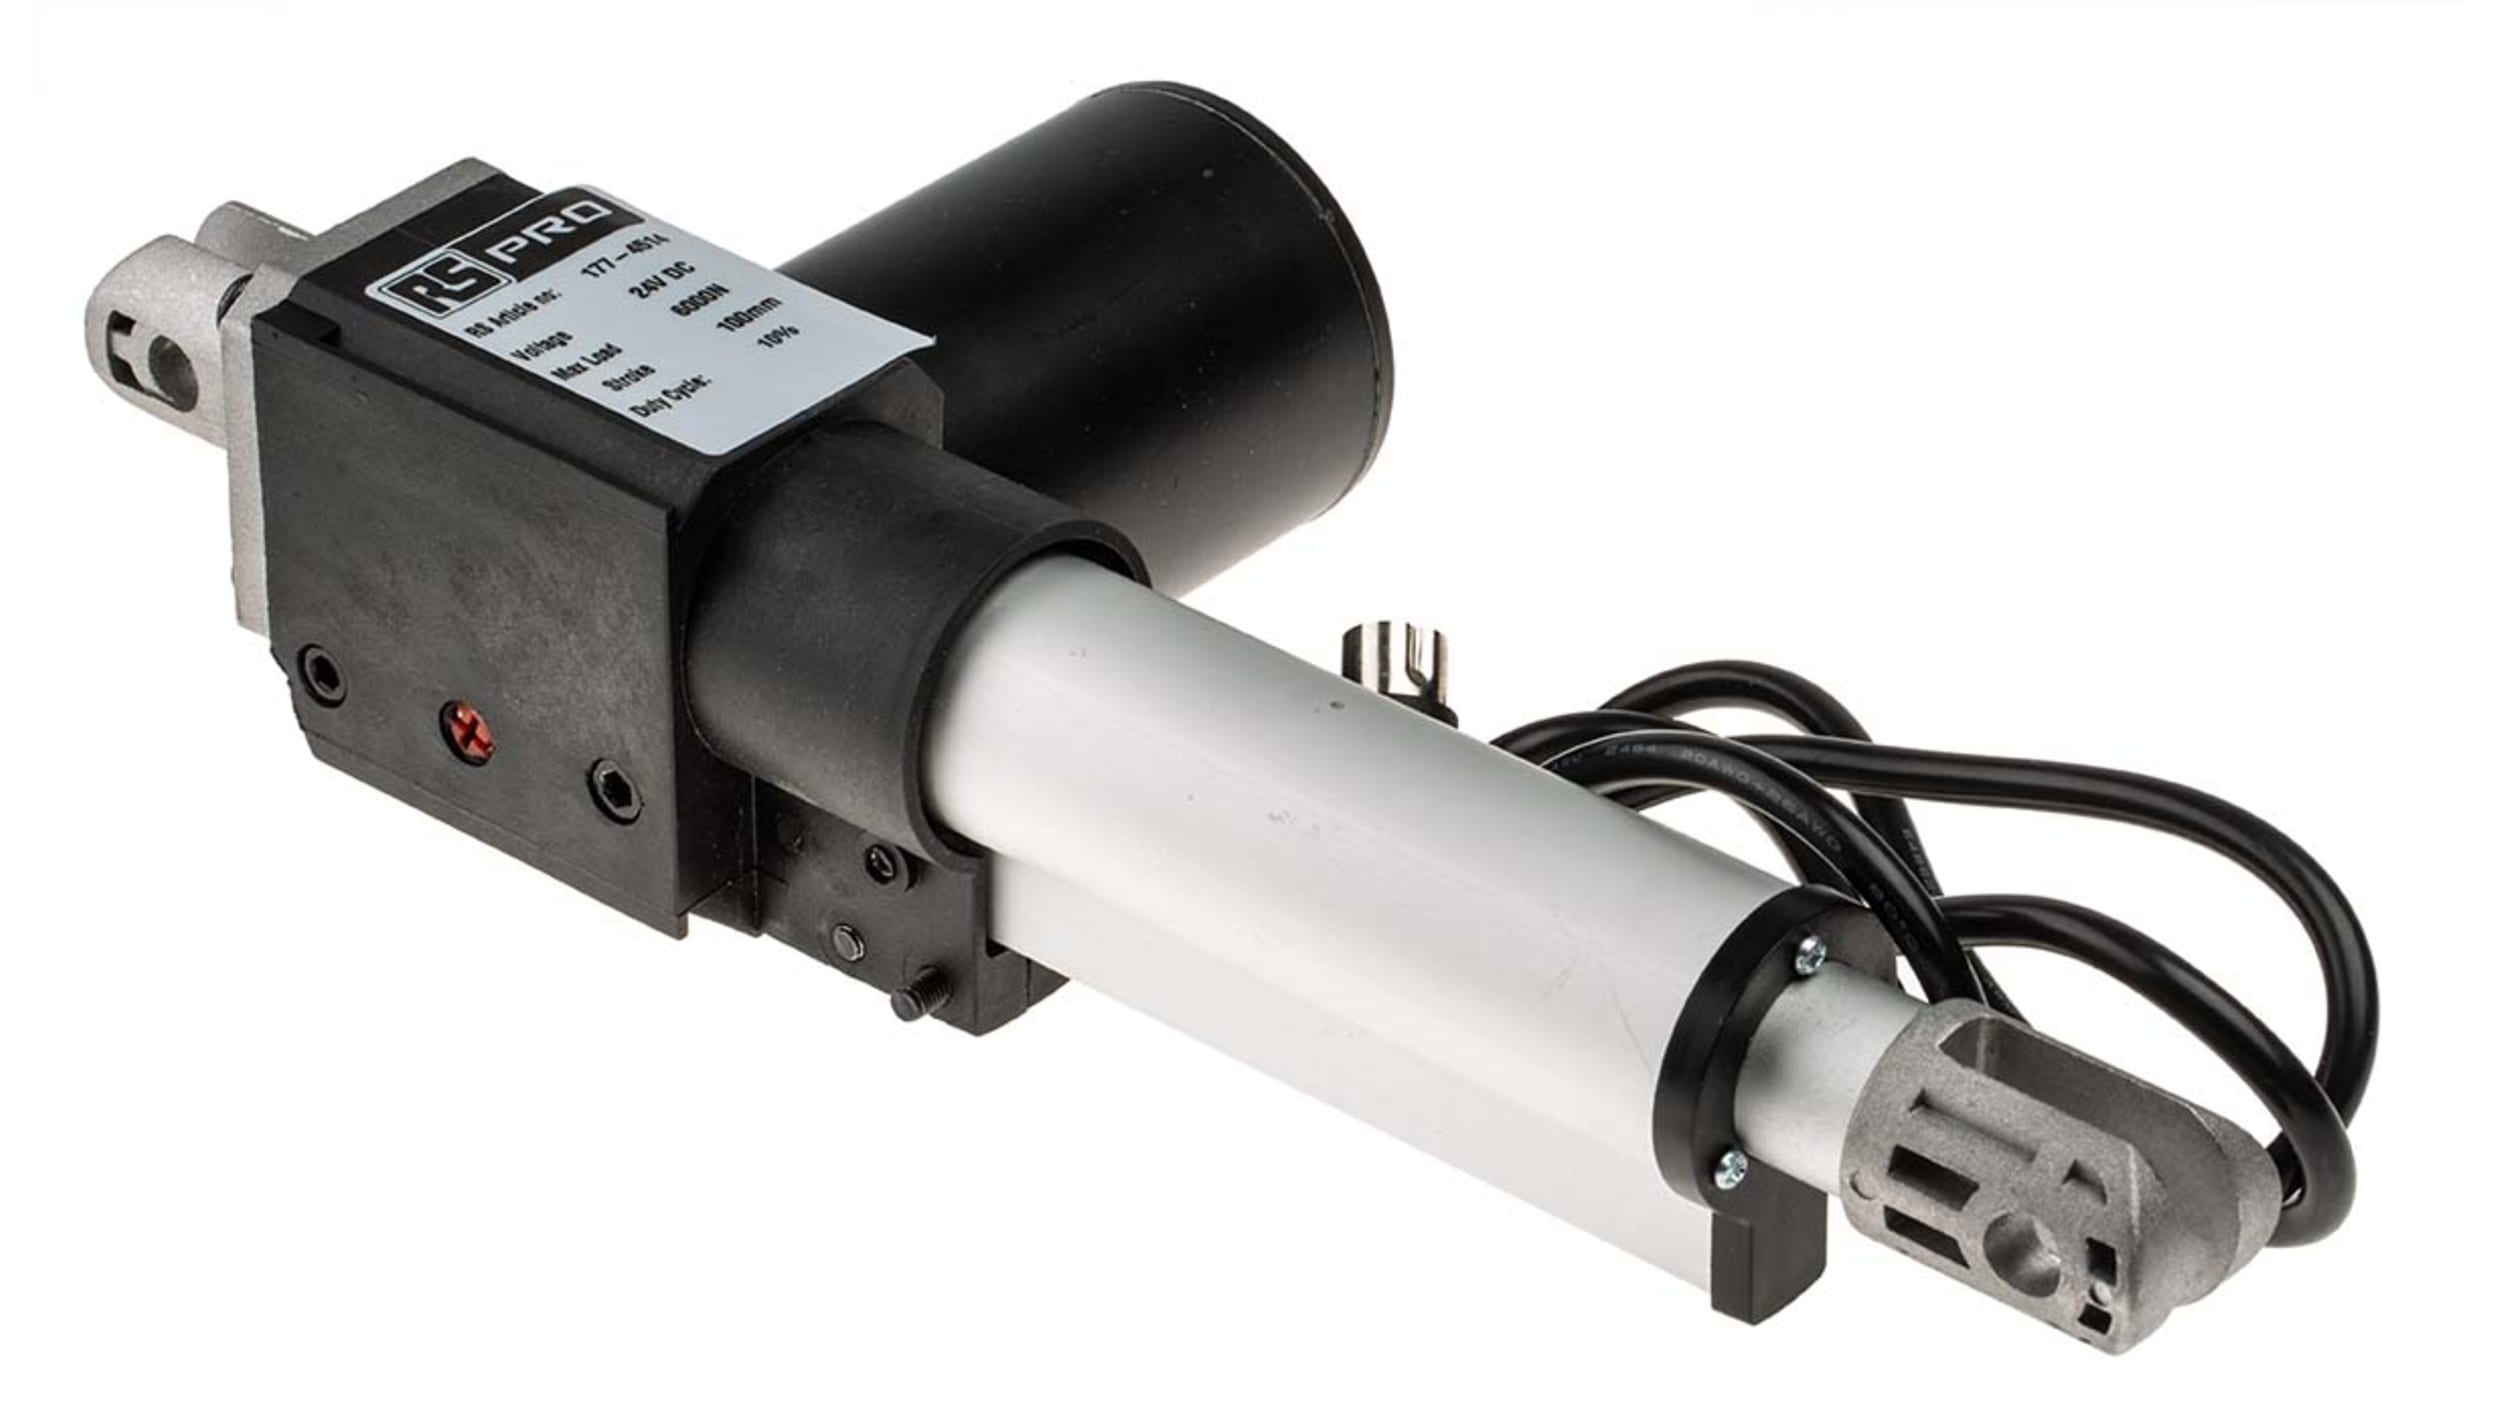 RS PRO, Actuador lineal eléctrico RS PRO, 12V dc, 500N, 14.6mm/s, 300mm, 177-4492